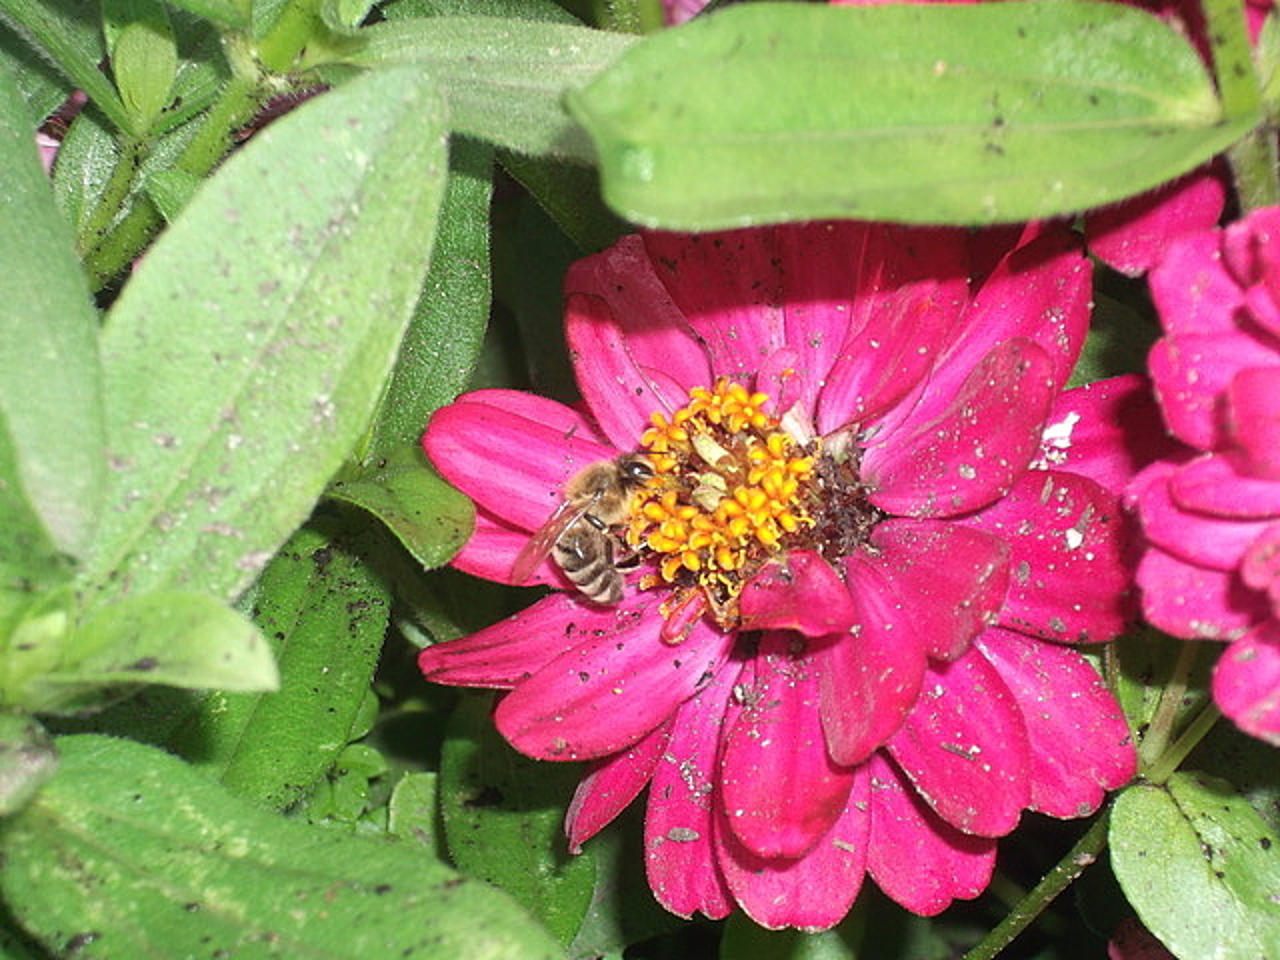 Honourable Mention – “Bee Getting Pollen” by Nicolas Jack Harley